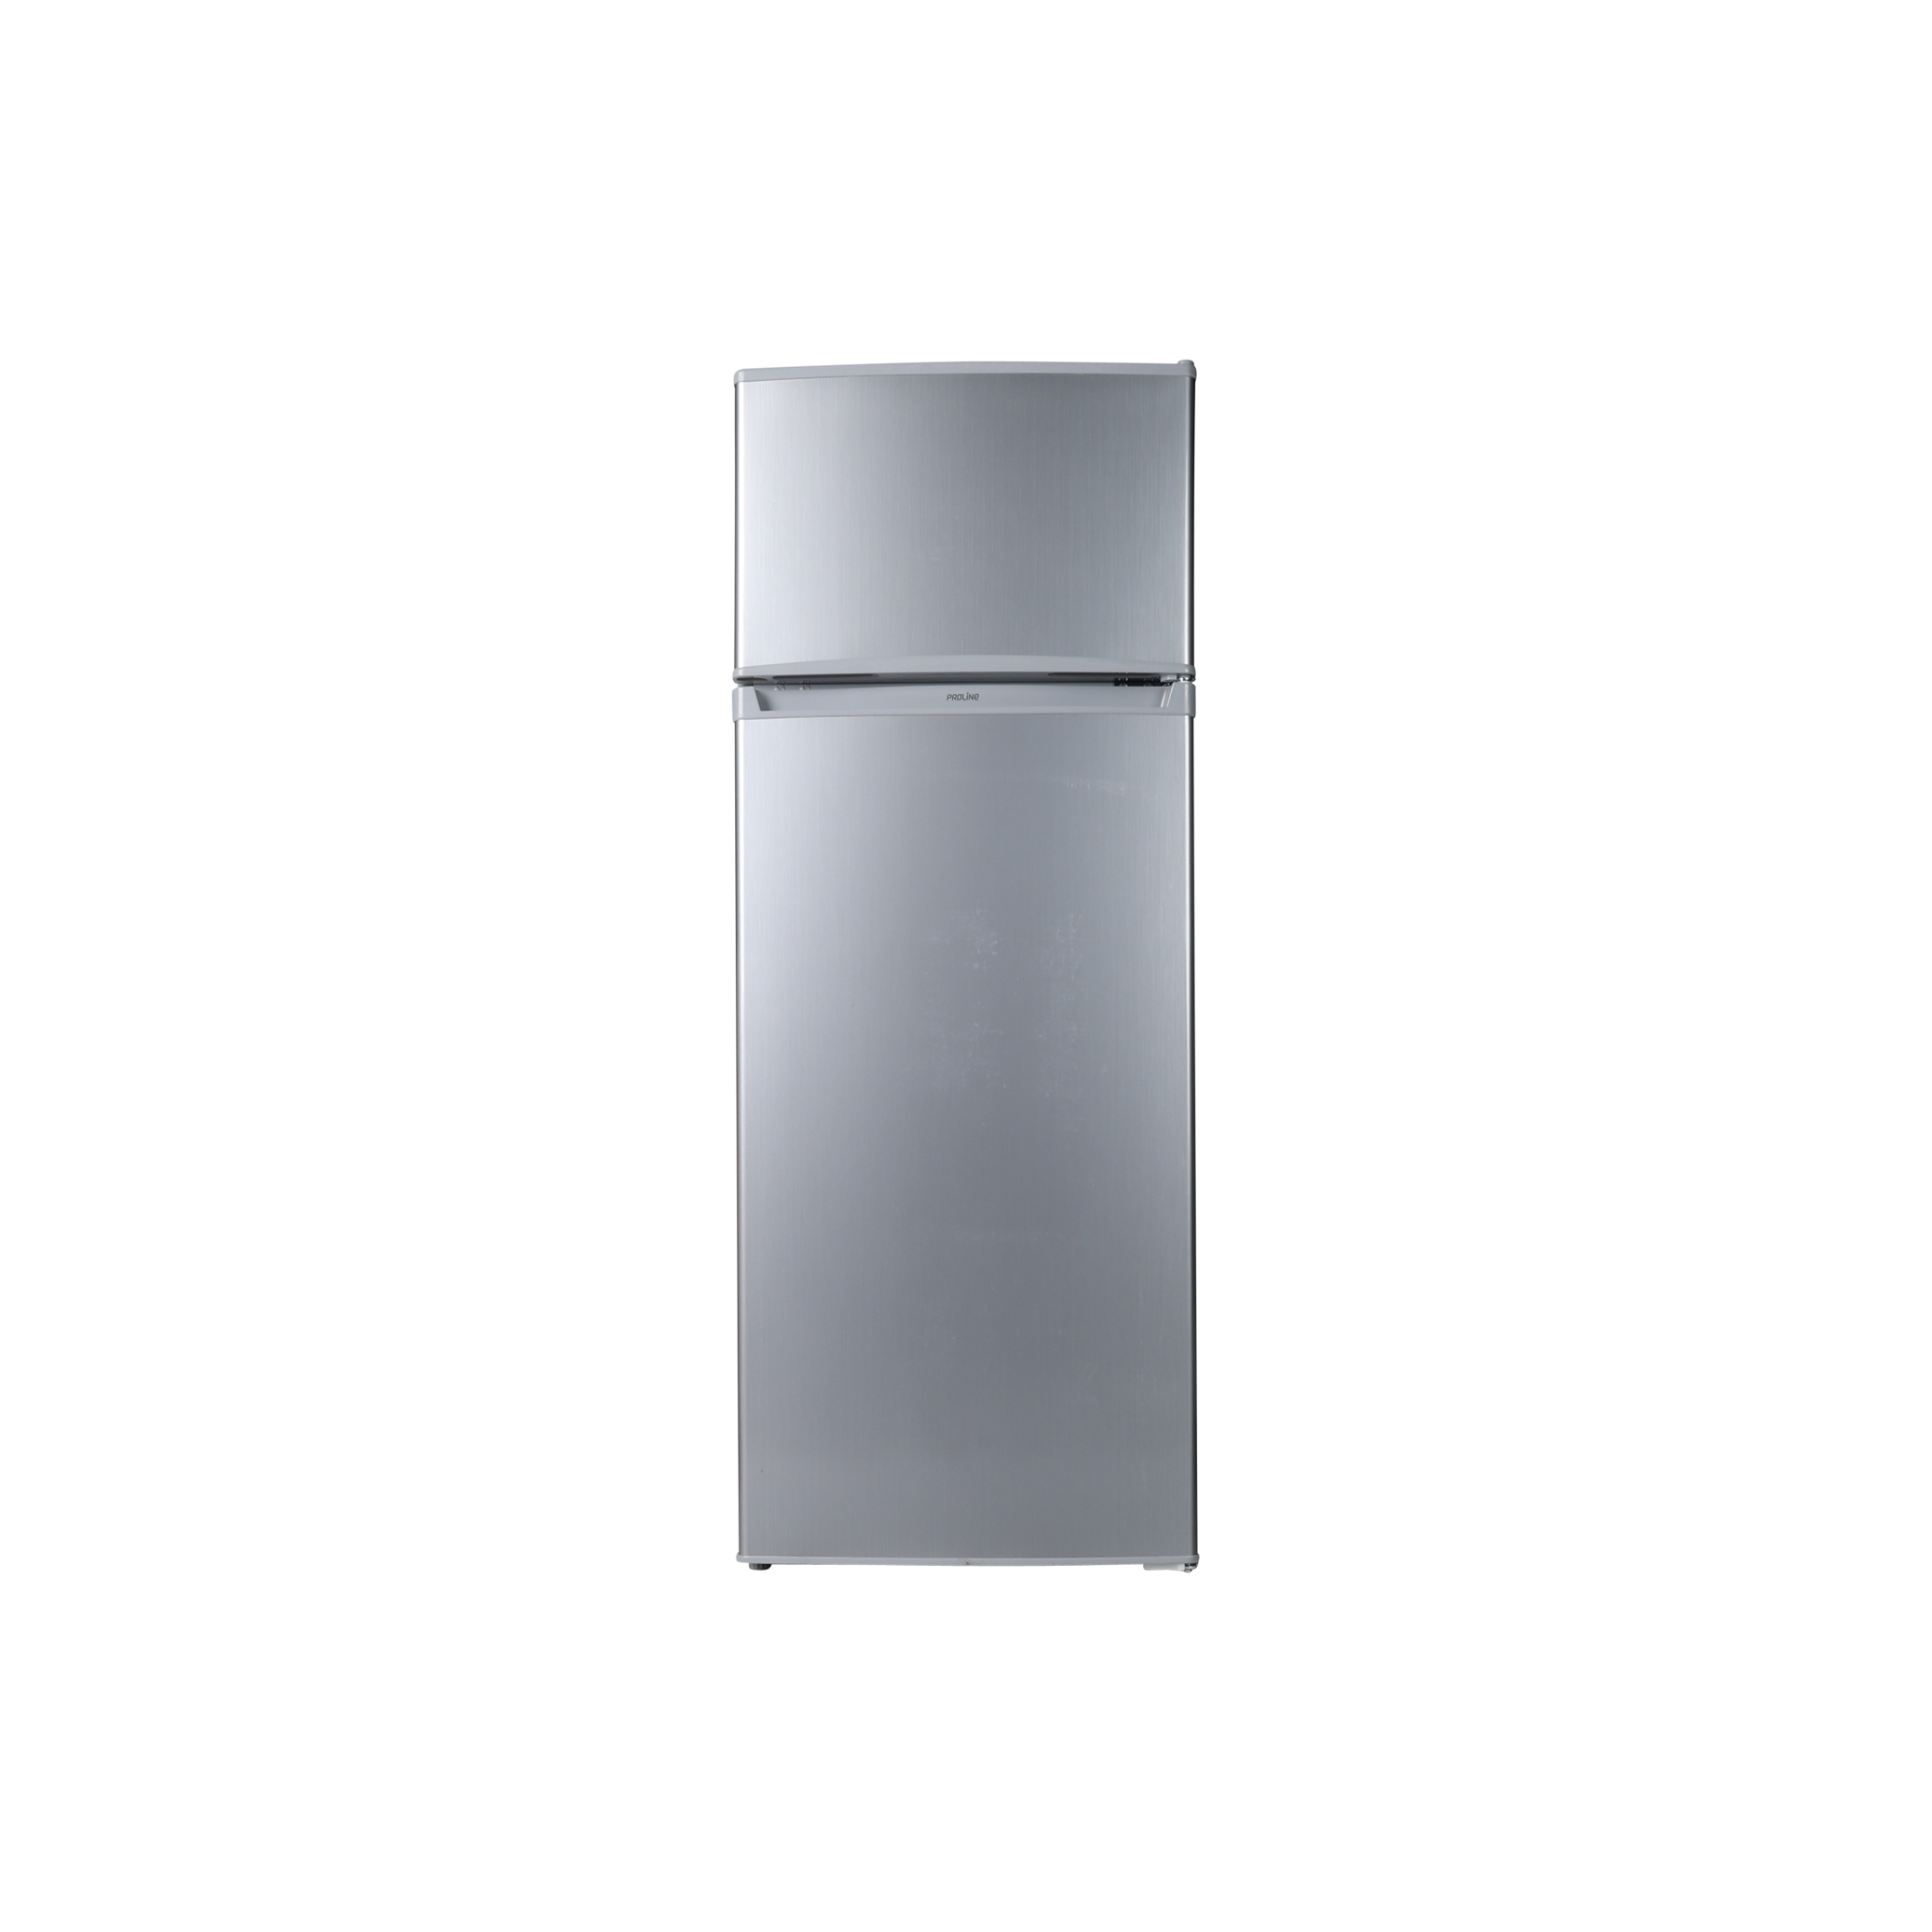 Refrigerateur - Frigo congélateur haut OCEANIC - OCEAF2D206S1